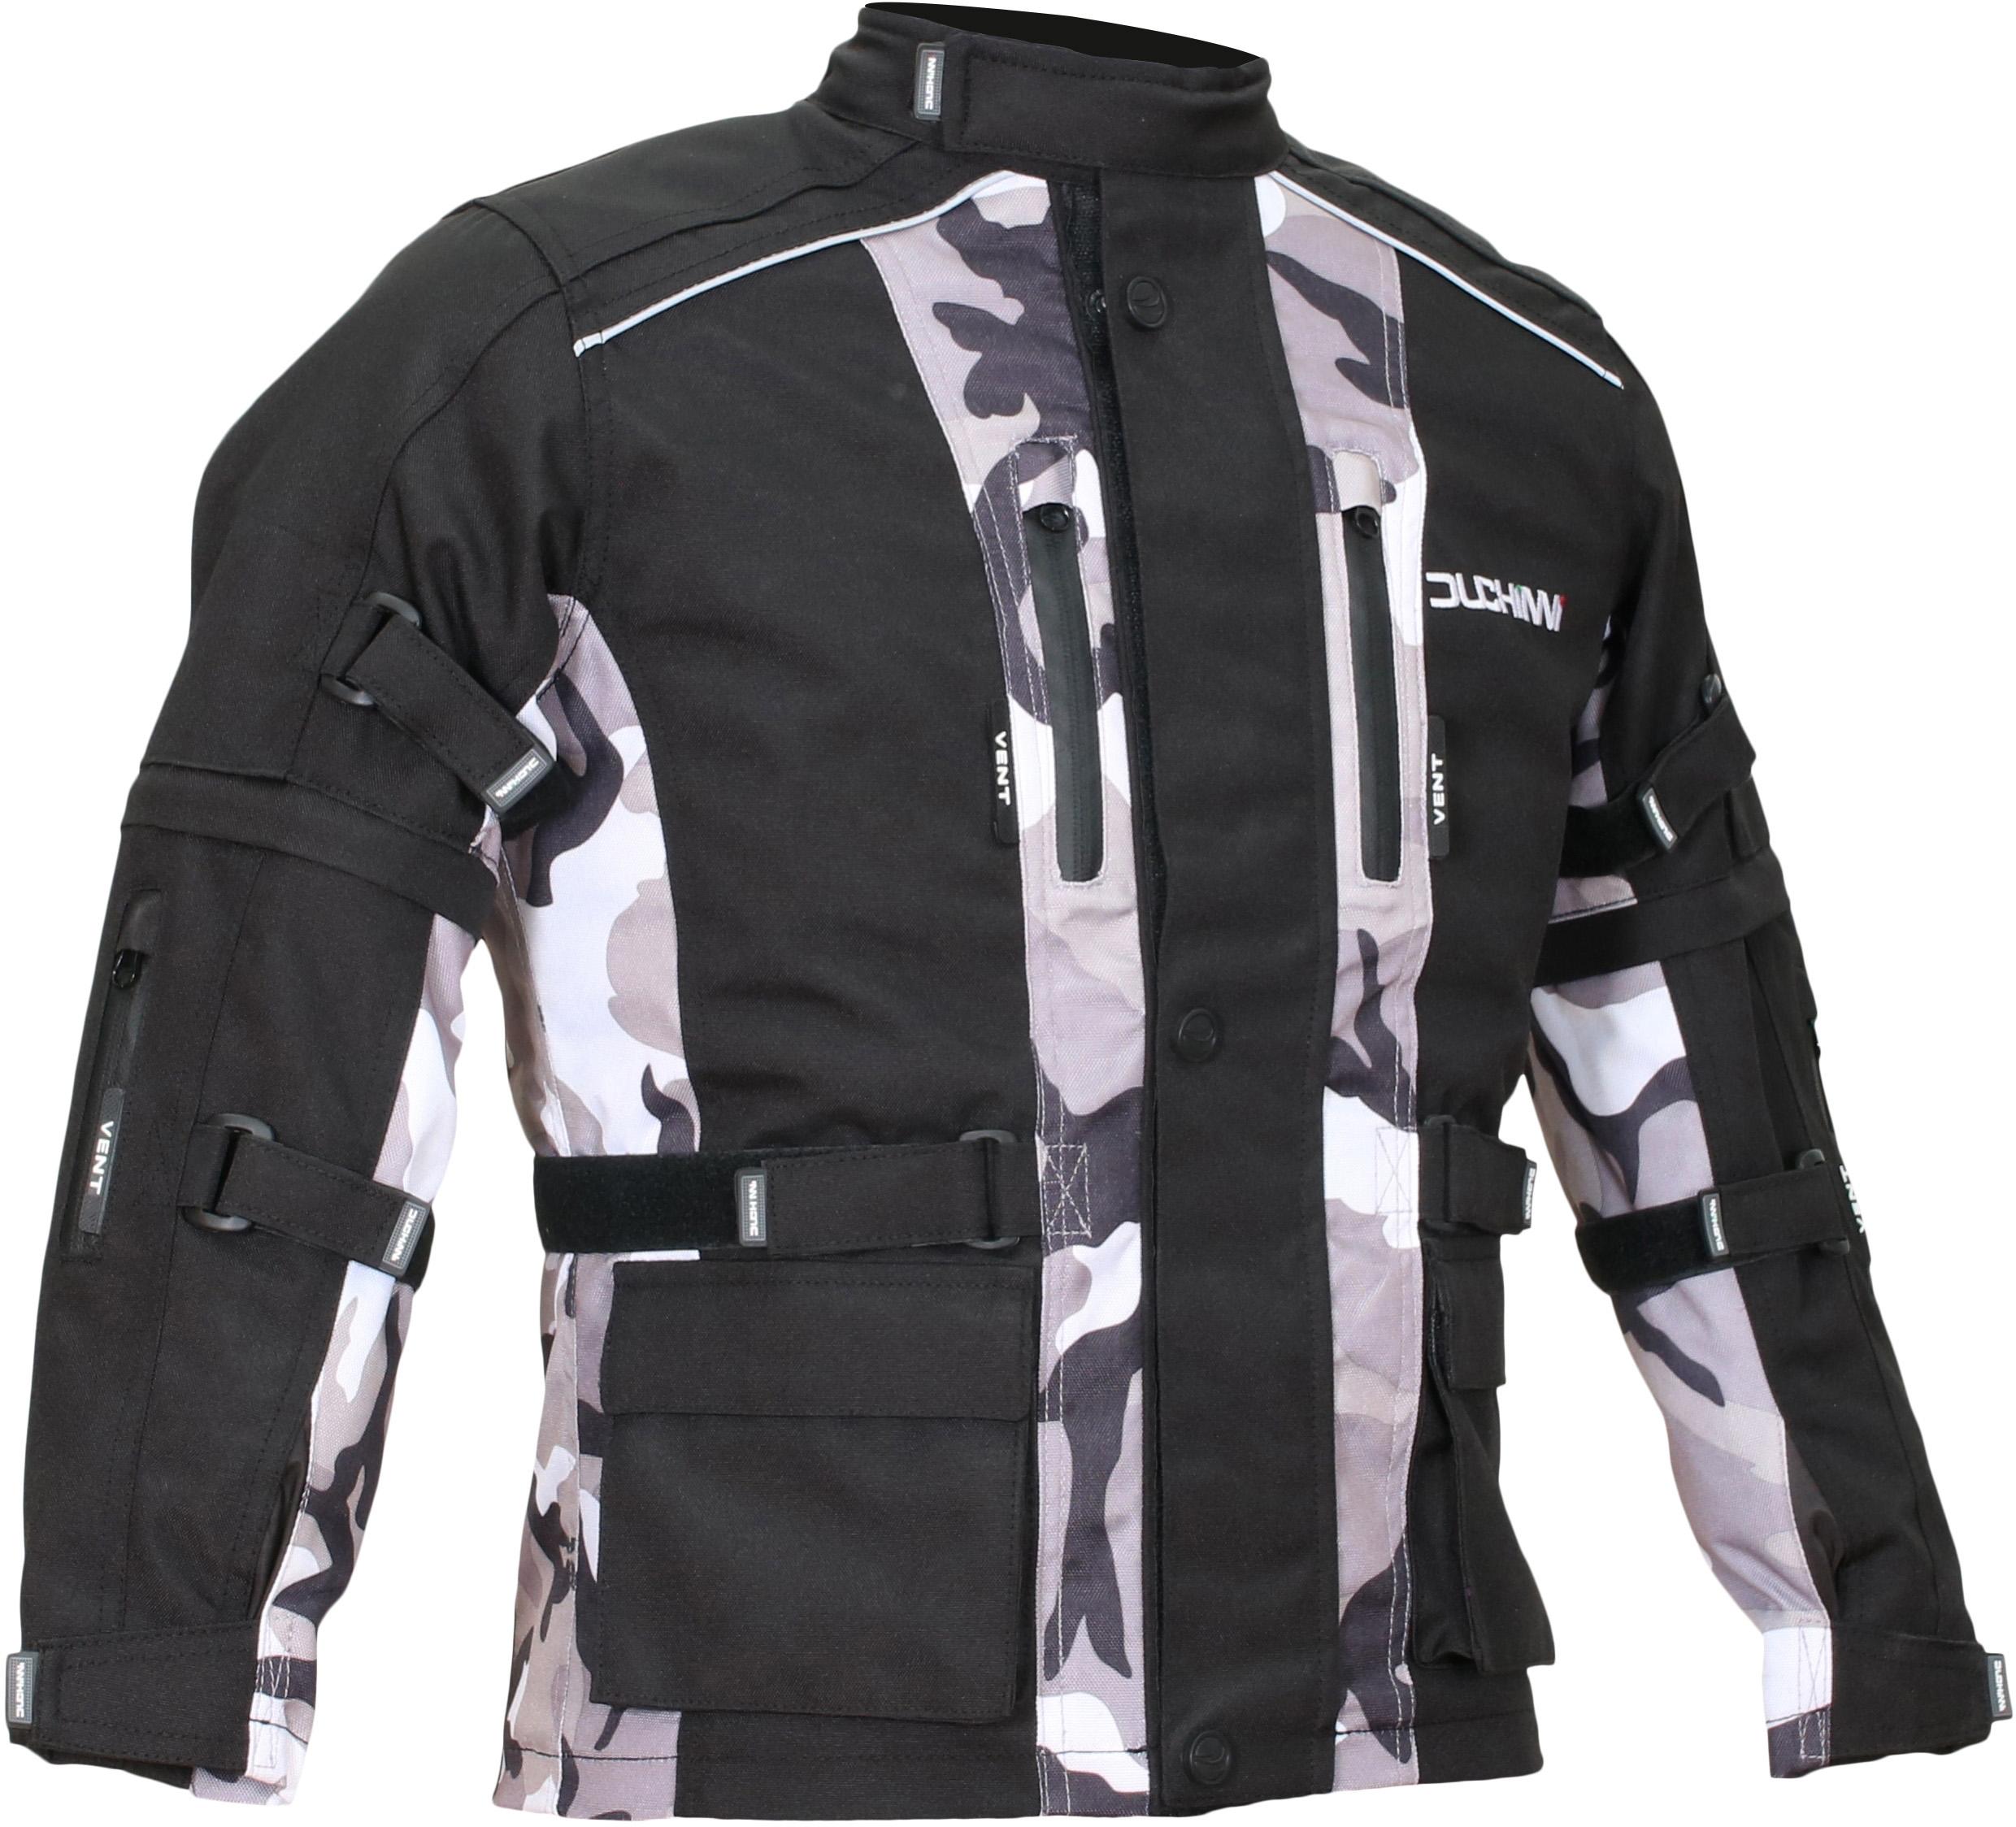 Duchinni Jago Youth Motorcycle Jacket - Black And Camo, M